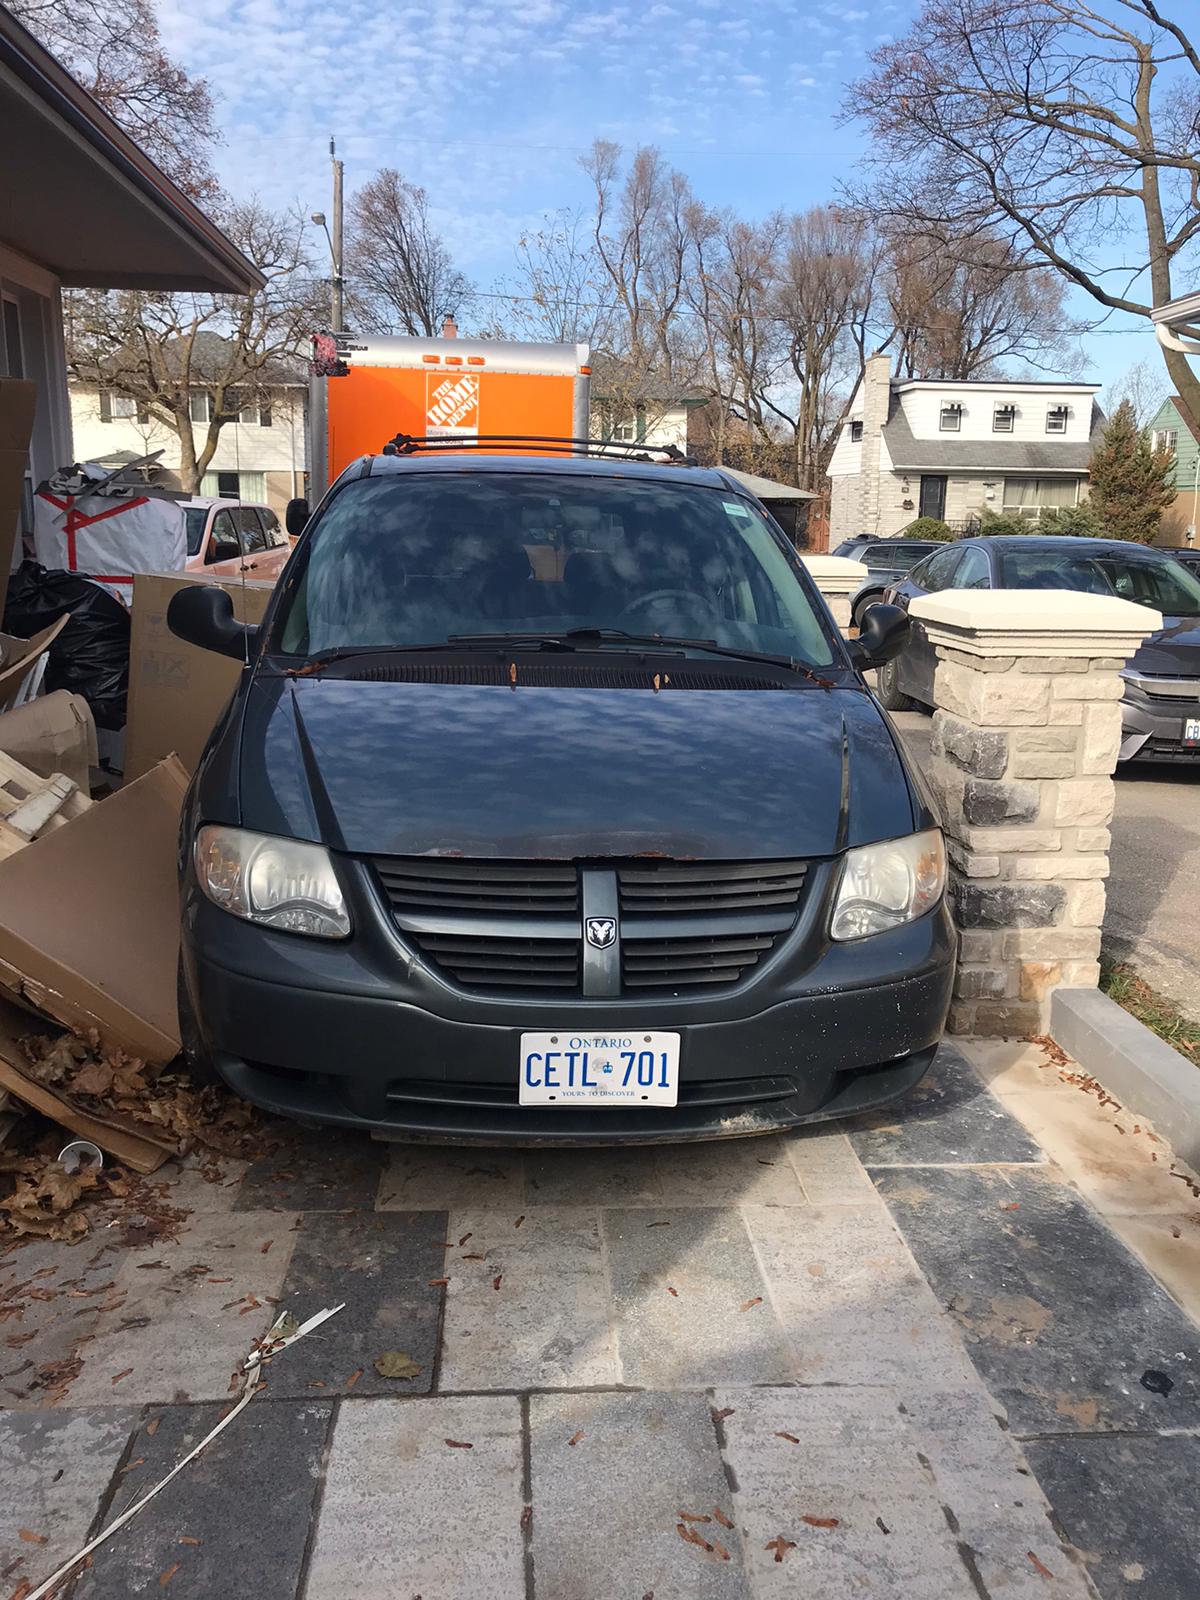 DODGE CARAVAN Junk or Scrap Car Removal